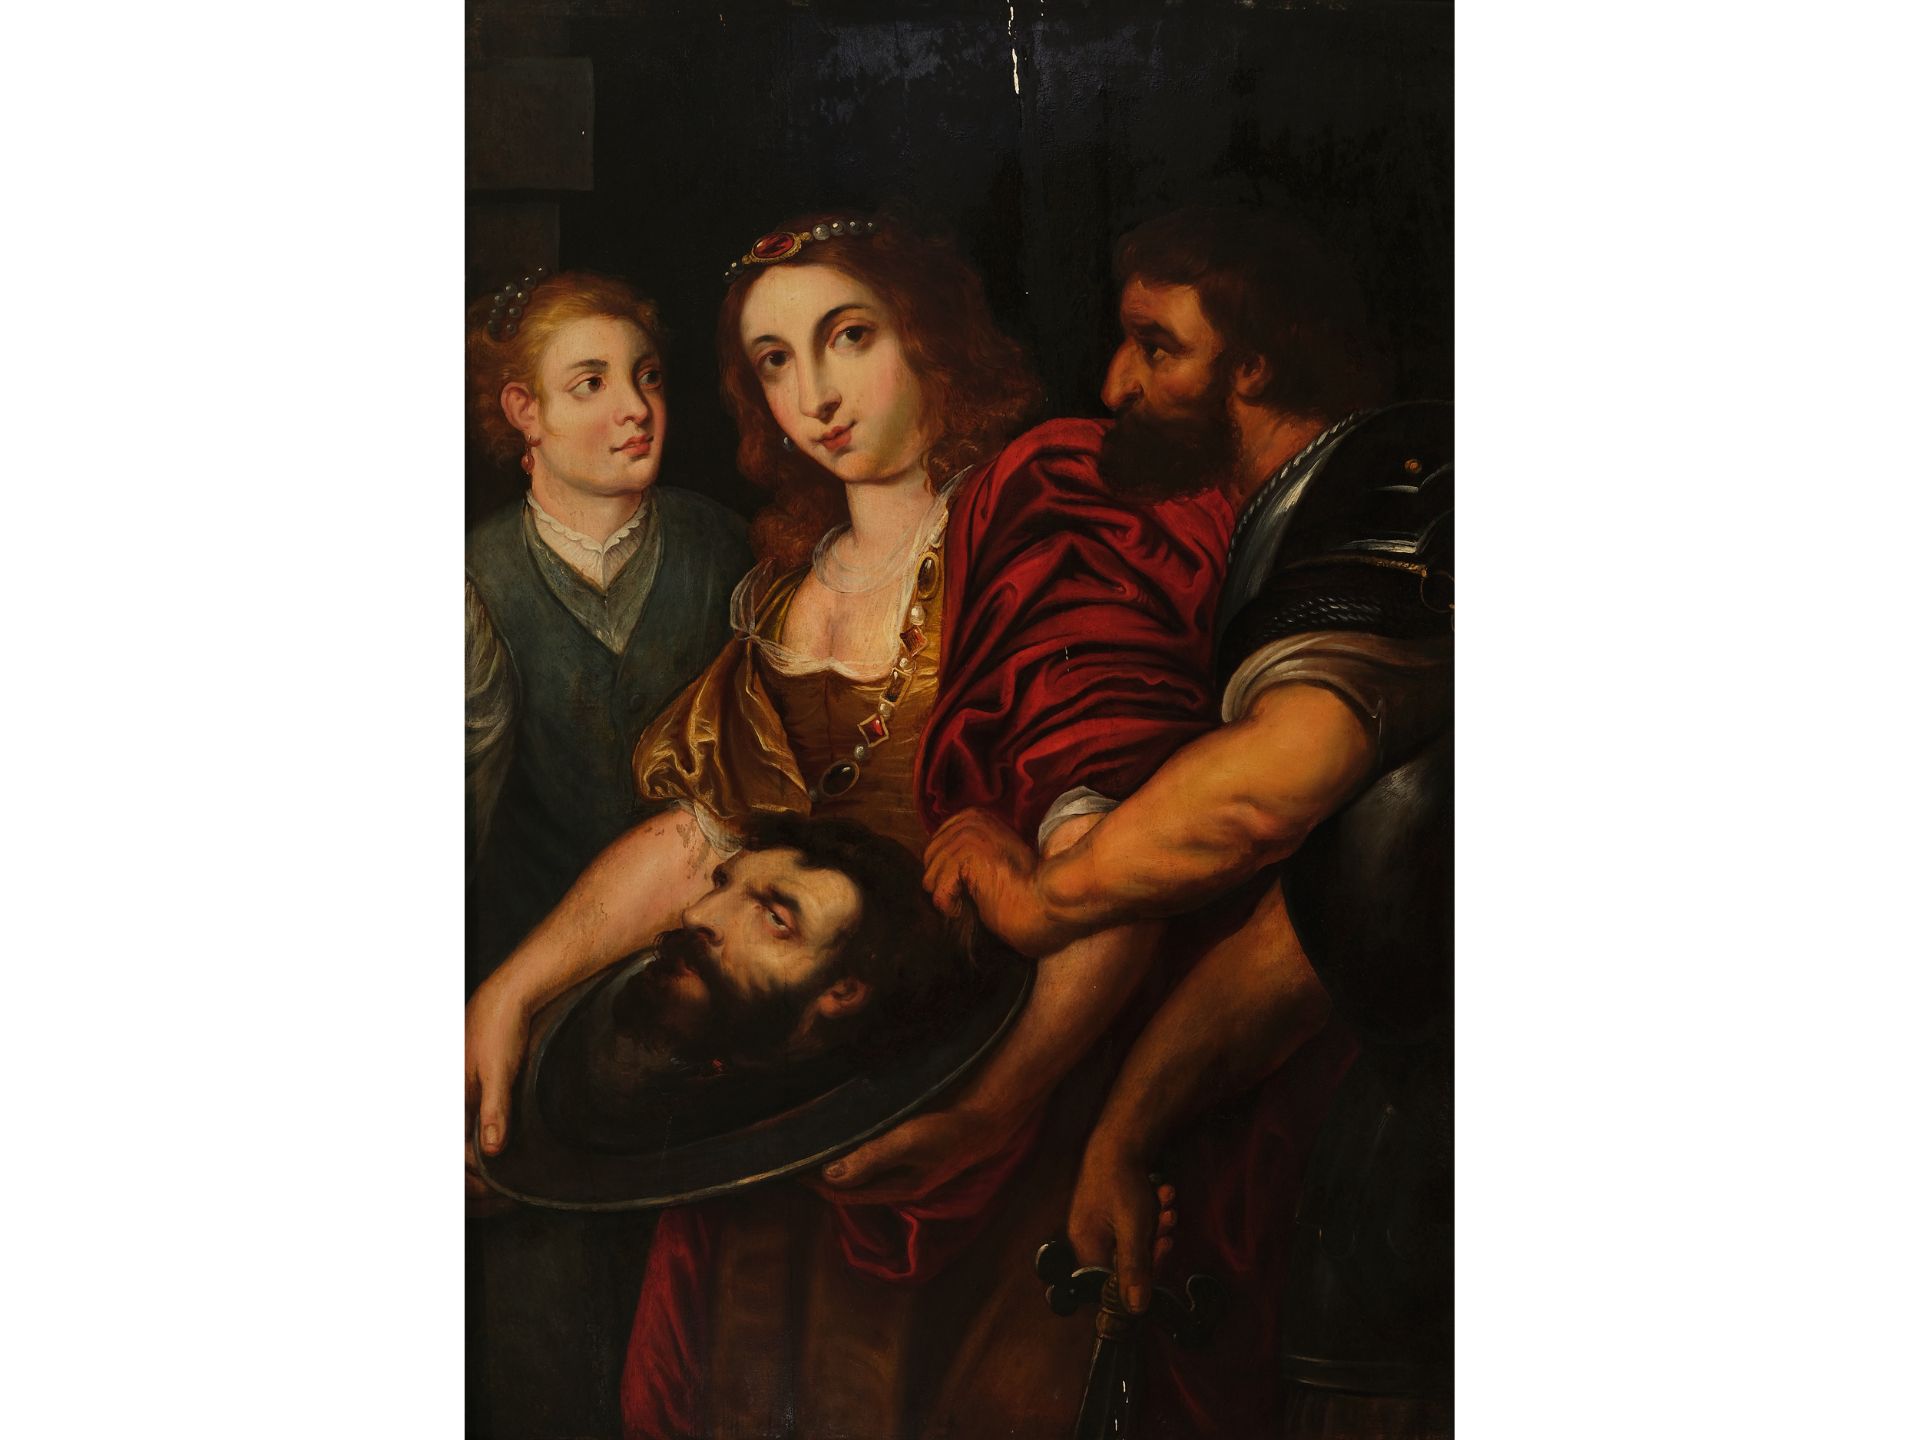 Peter Paul Rubens, Siegen 1577 - 1640 Antwerp, Workshop